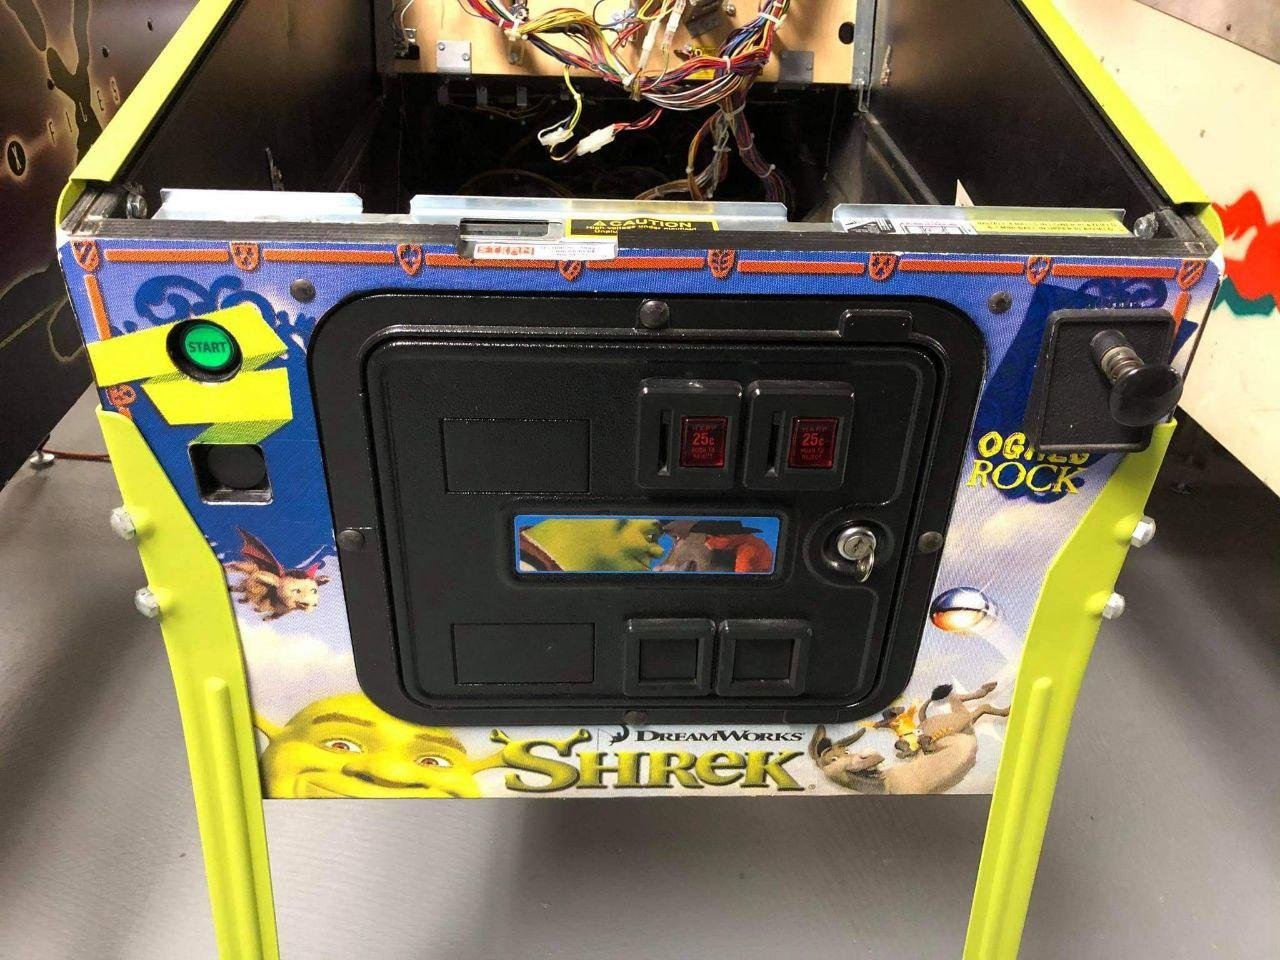 Pinball Shrek Stern Maquina de colecionador!, Facebook Marketplace